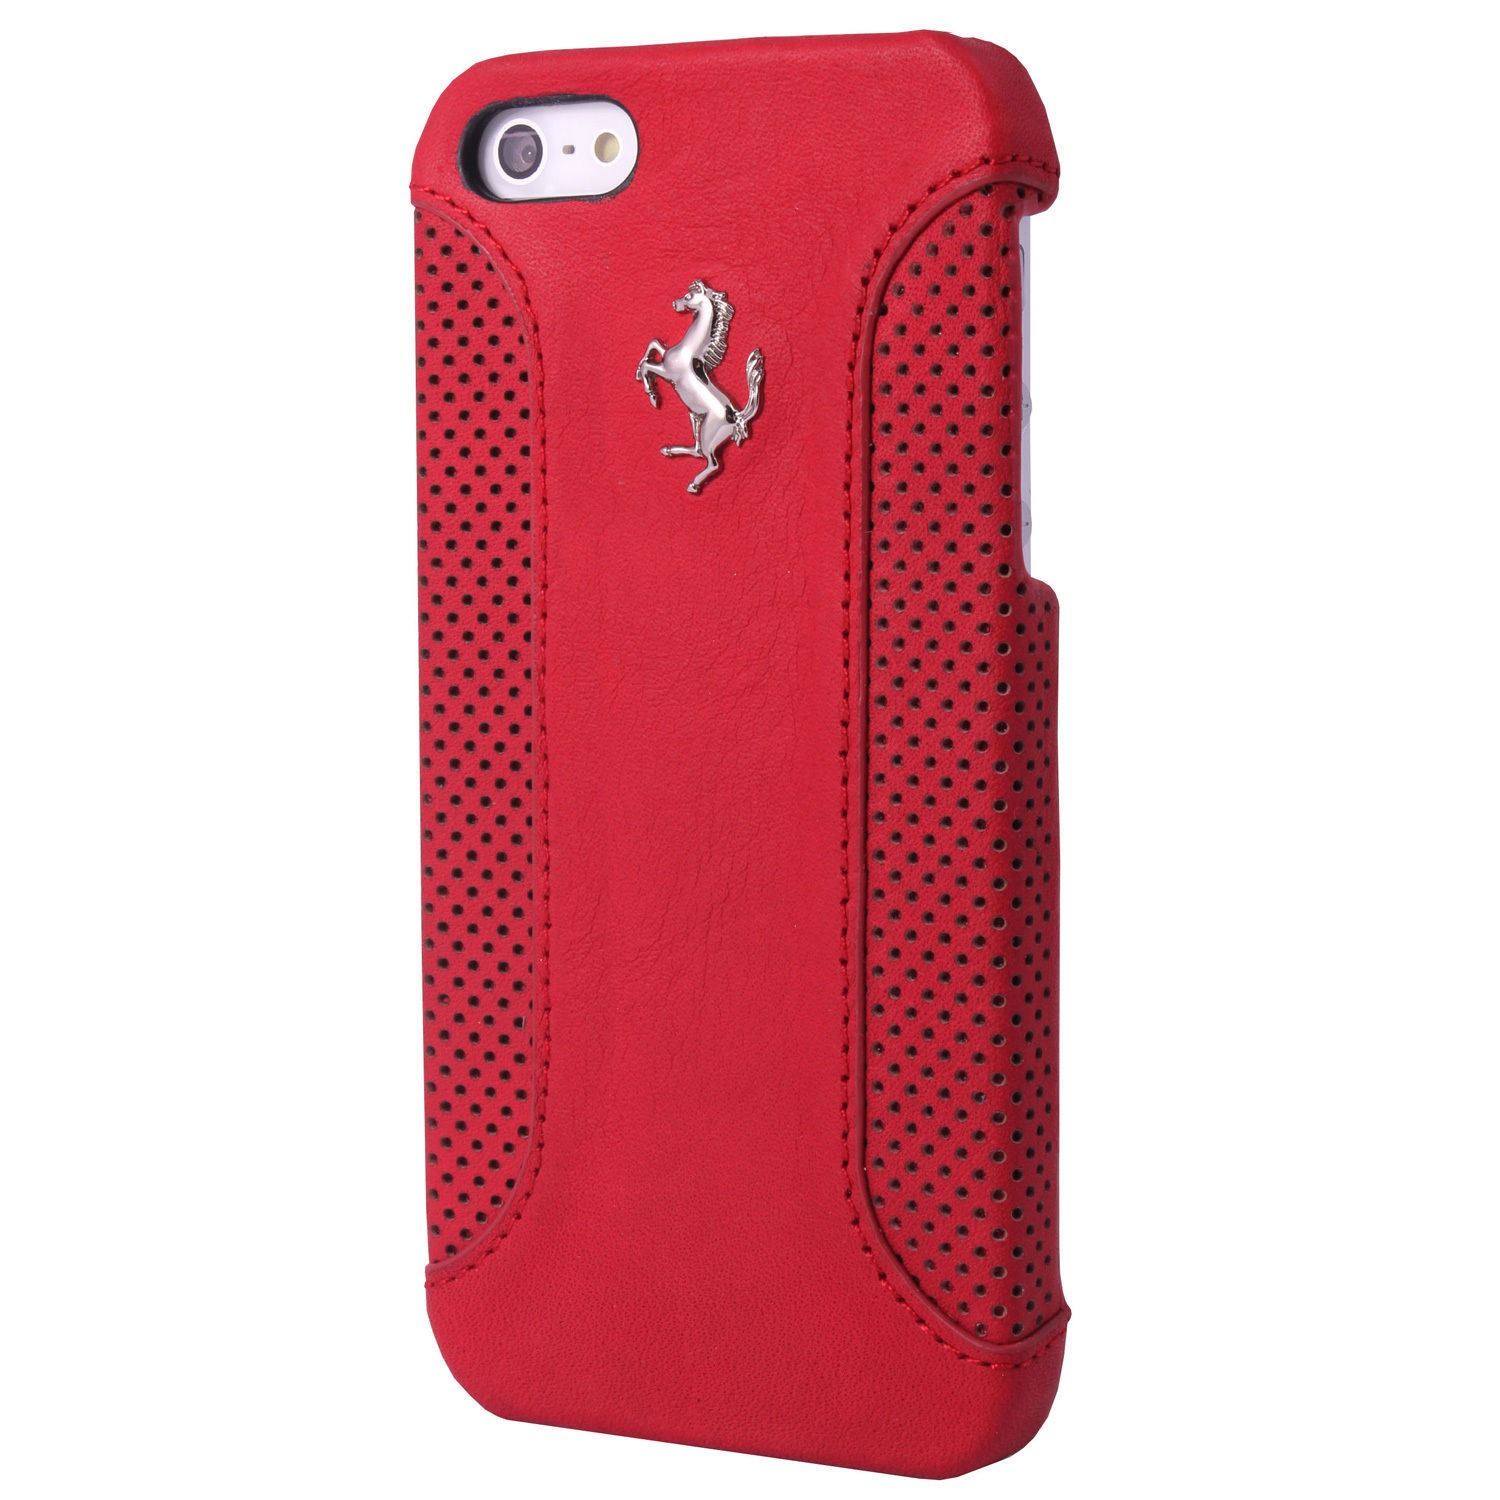 Nevelig elegant voorwoord Ferrari Genuine Official Red Leather Hard Case iPhone 5 / 5S FEF12HCP5RE